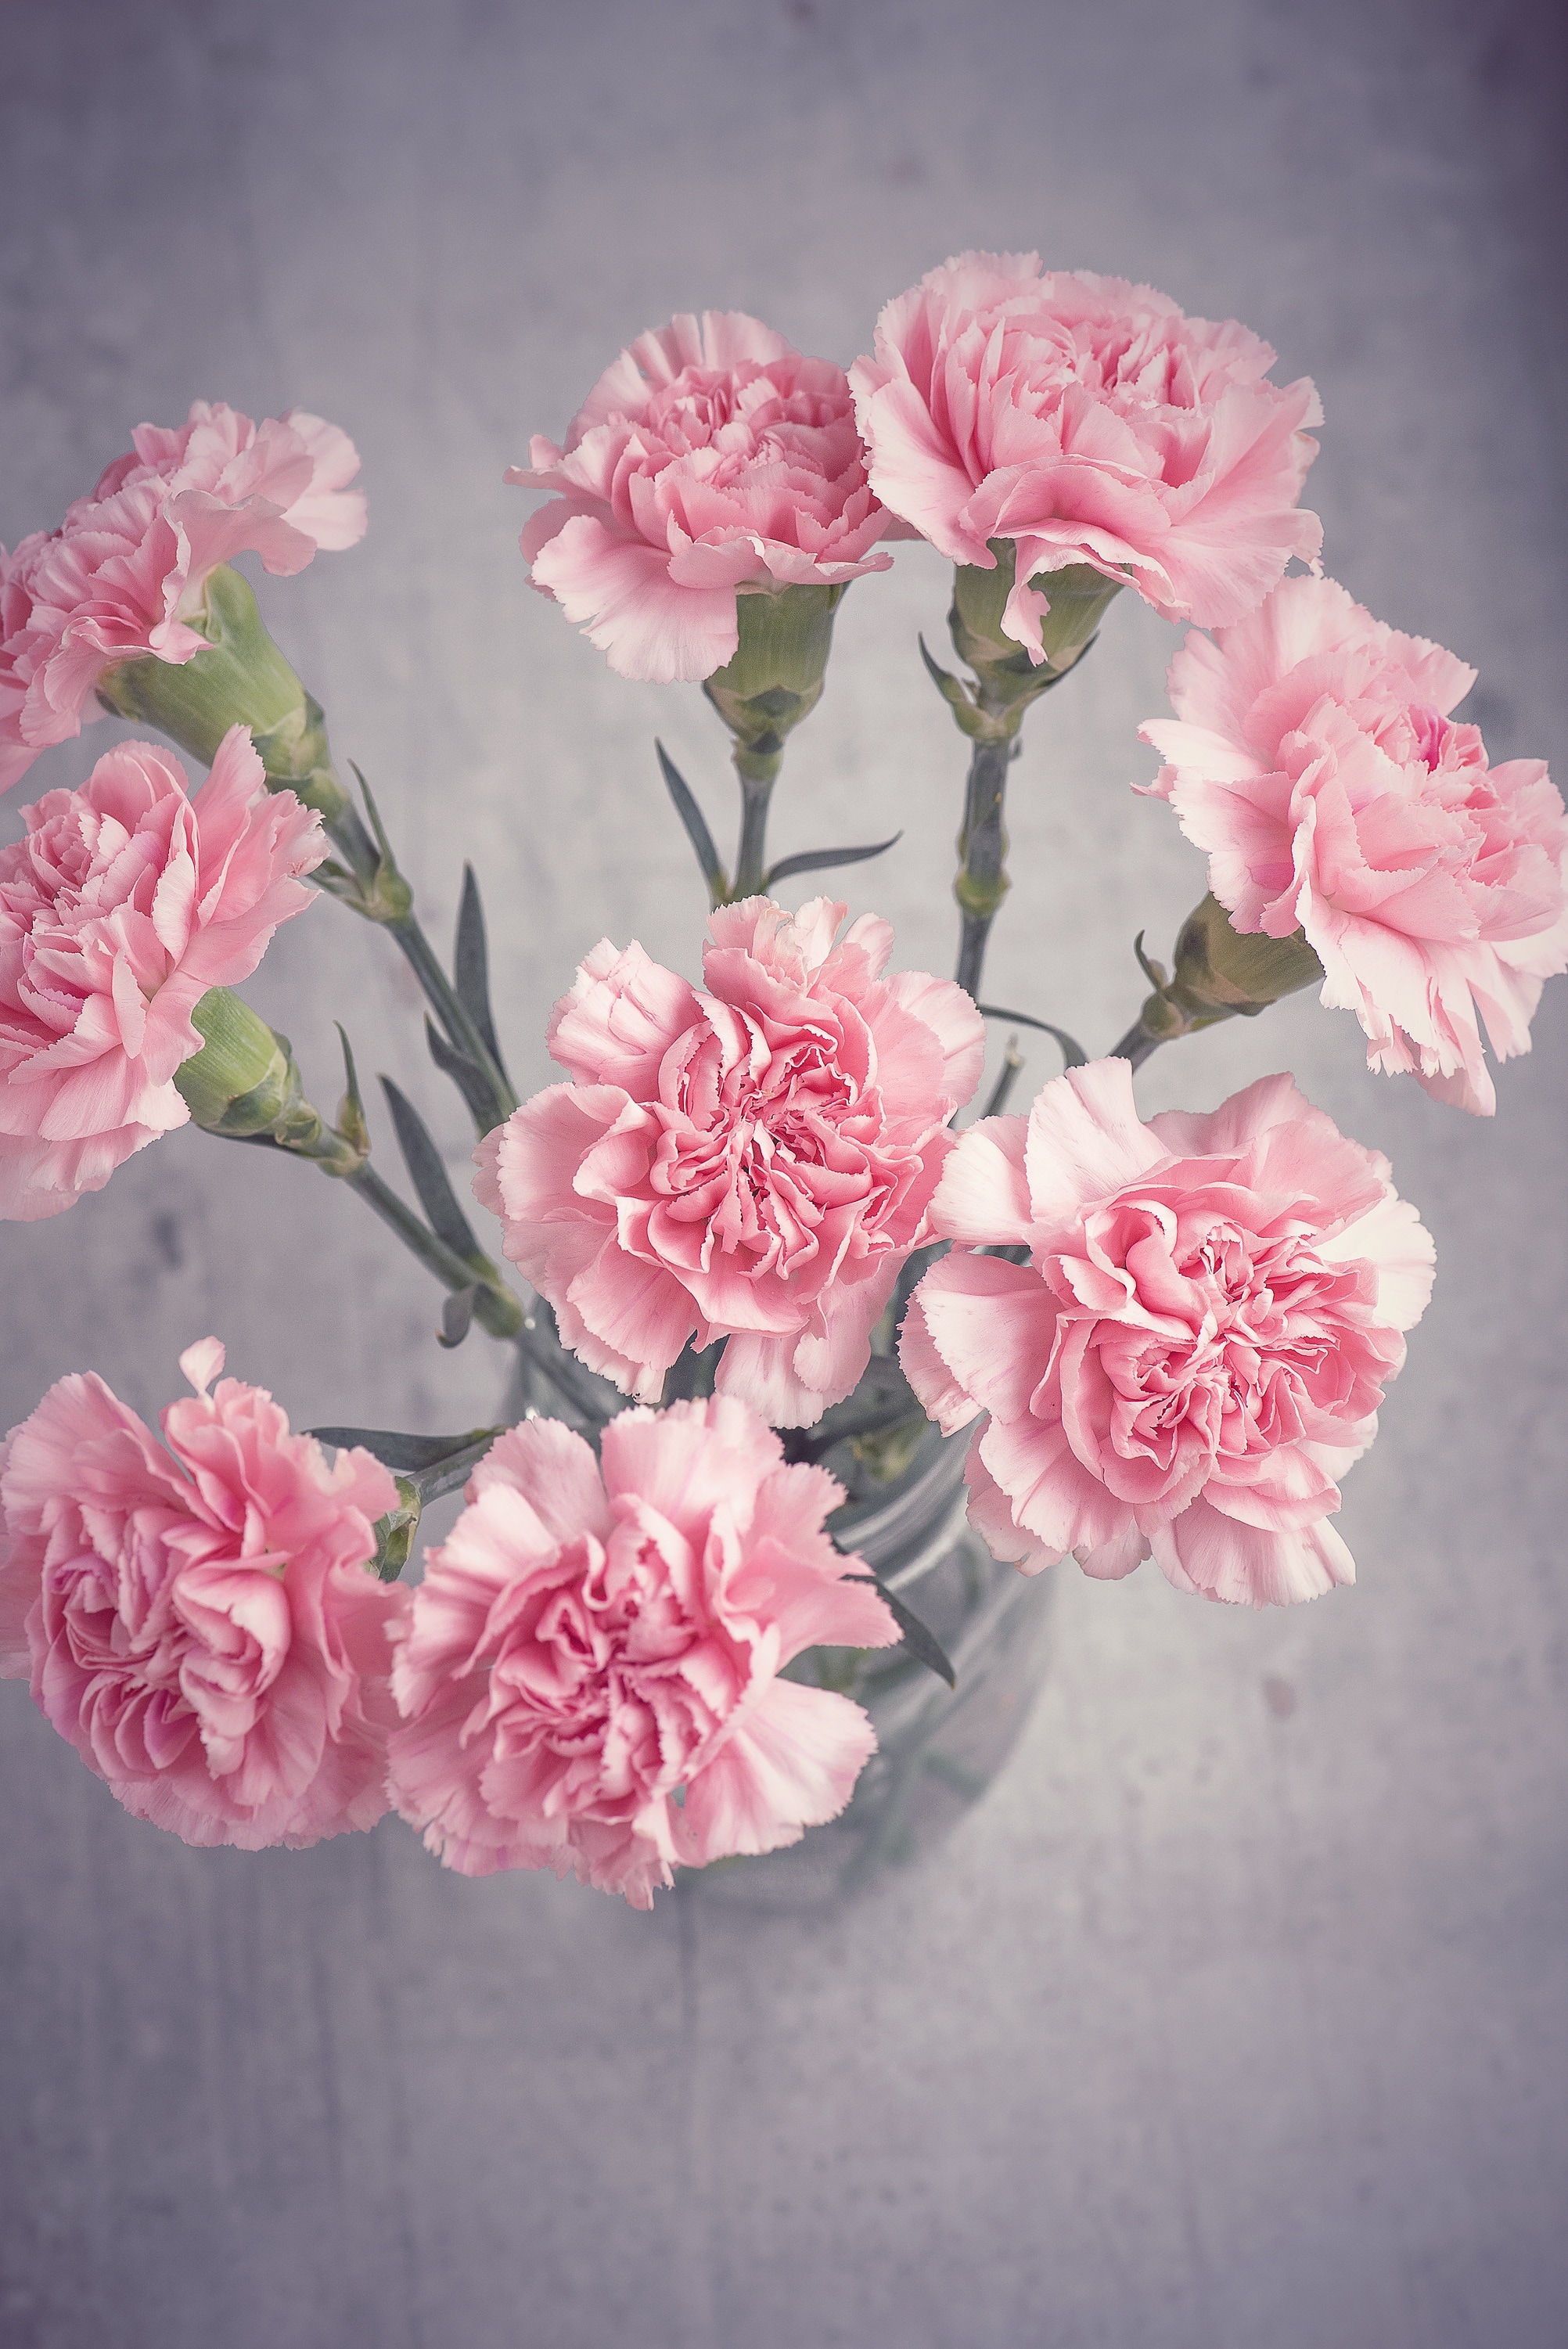 Vase Carnation Flowers Flower Image